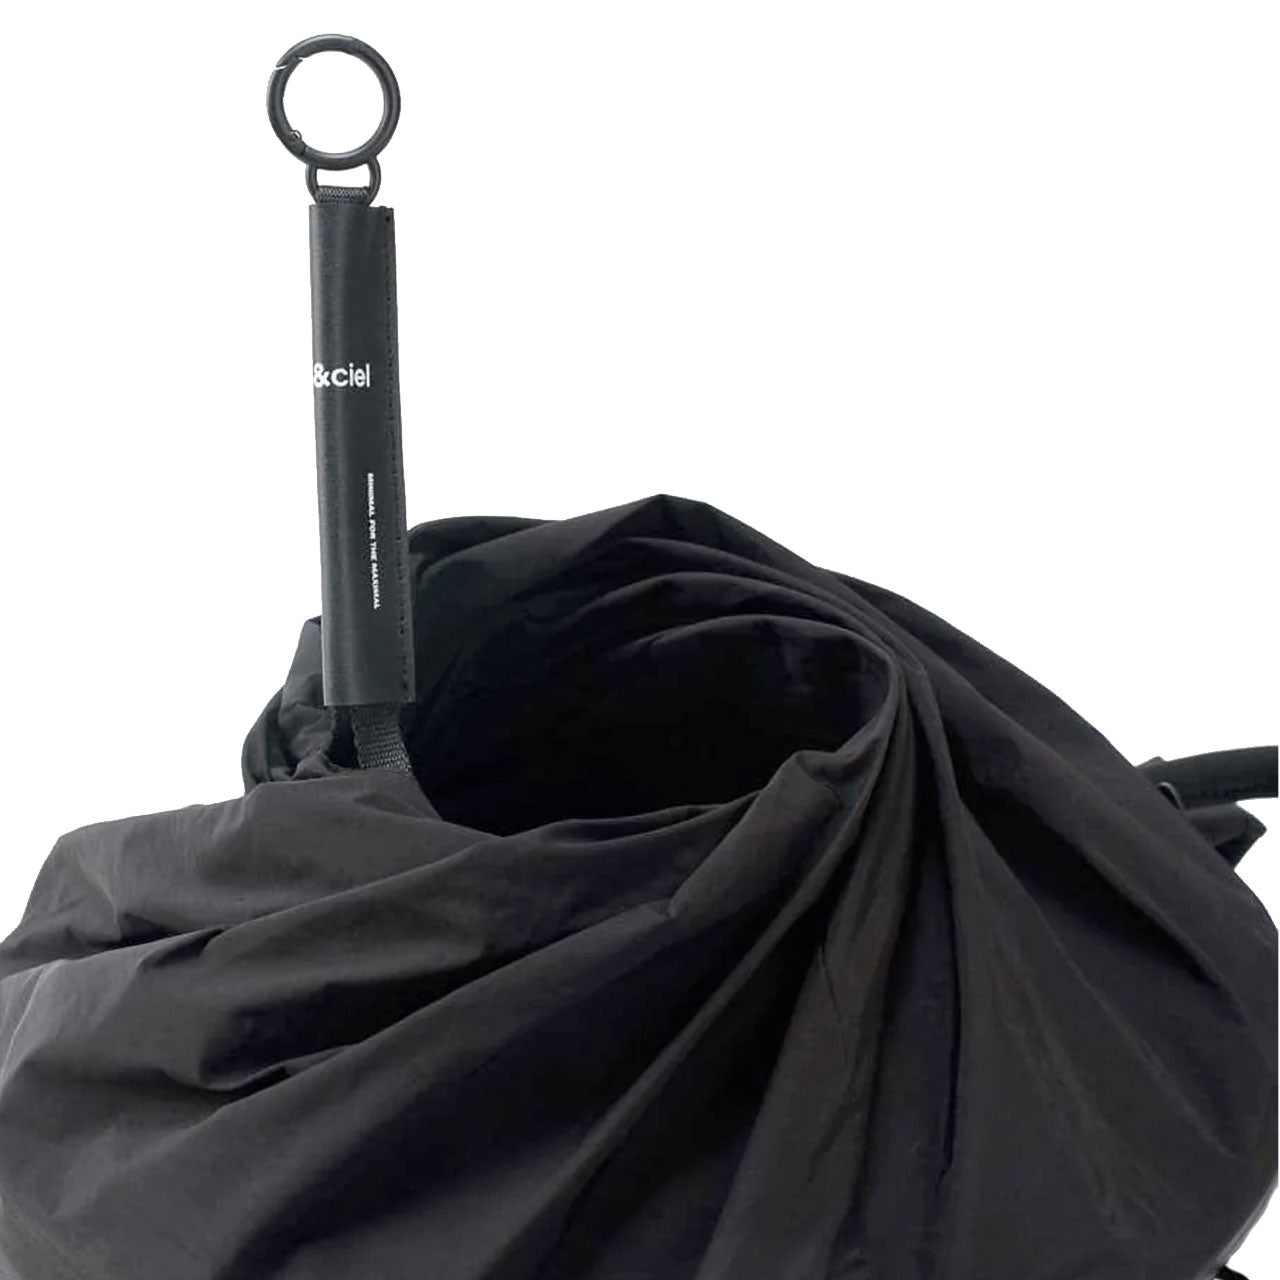 côte&ciel adria infinity backpack (black)